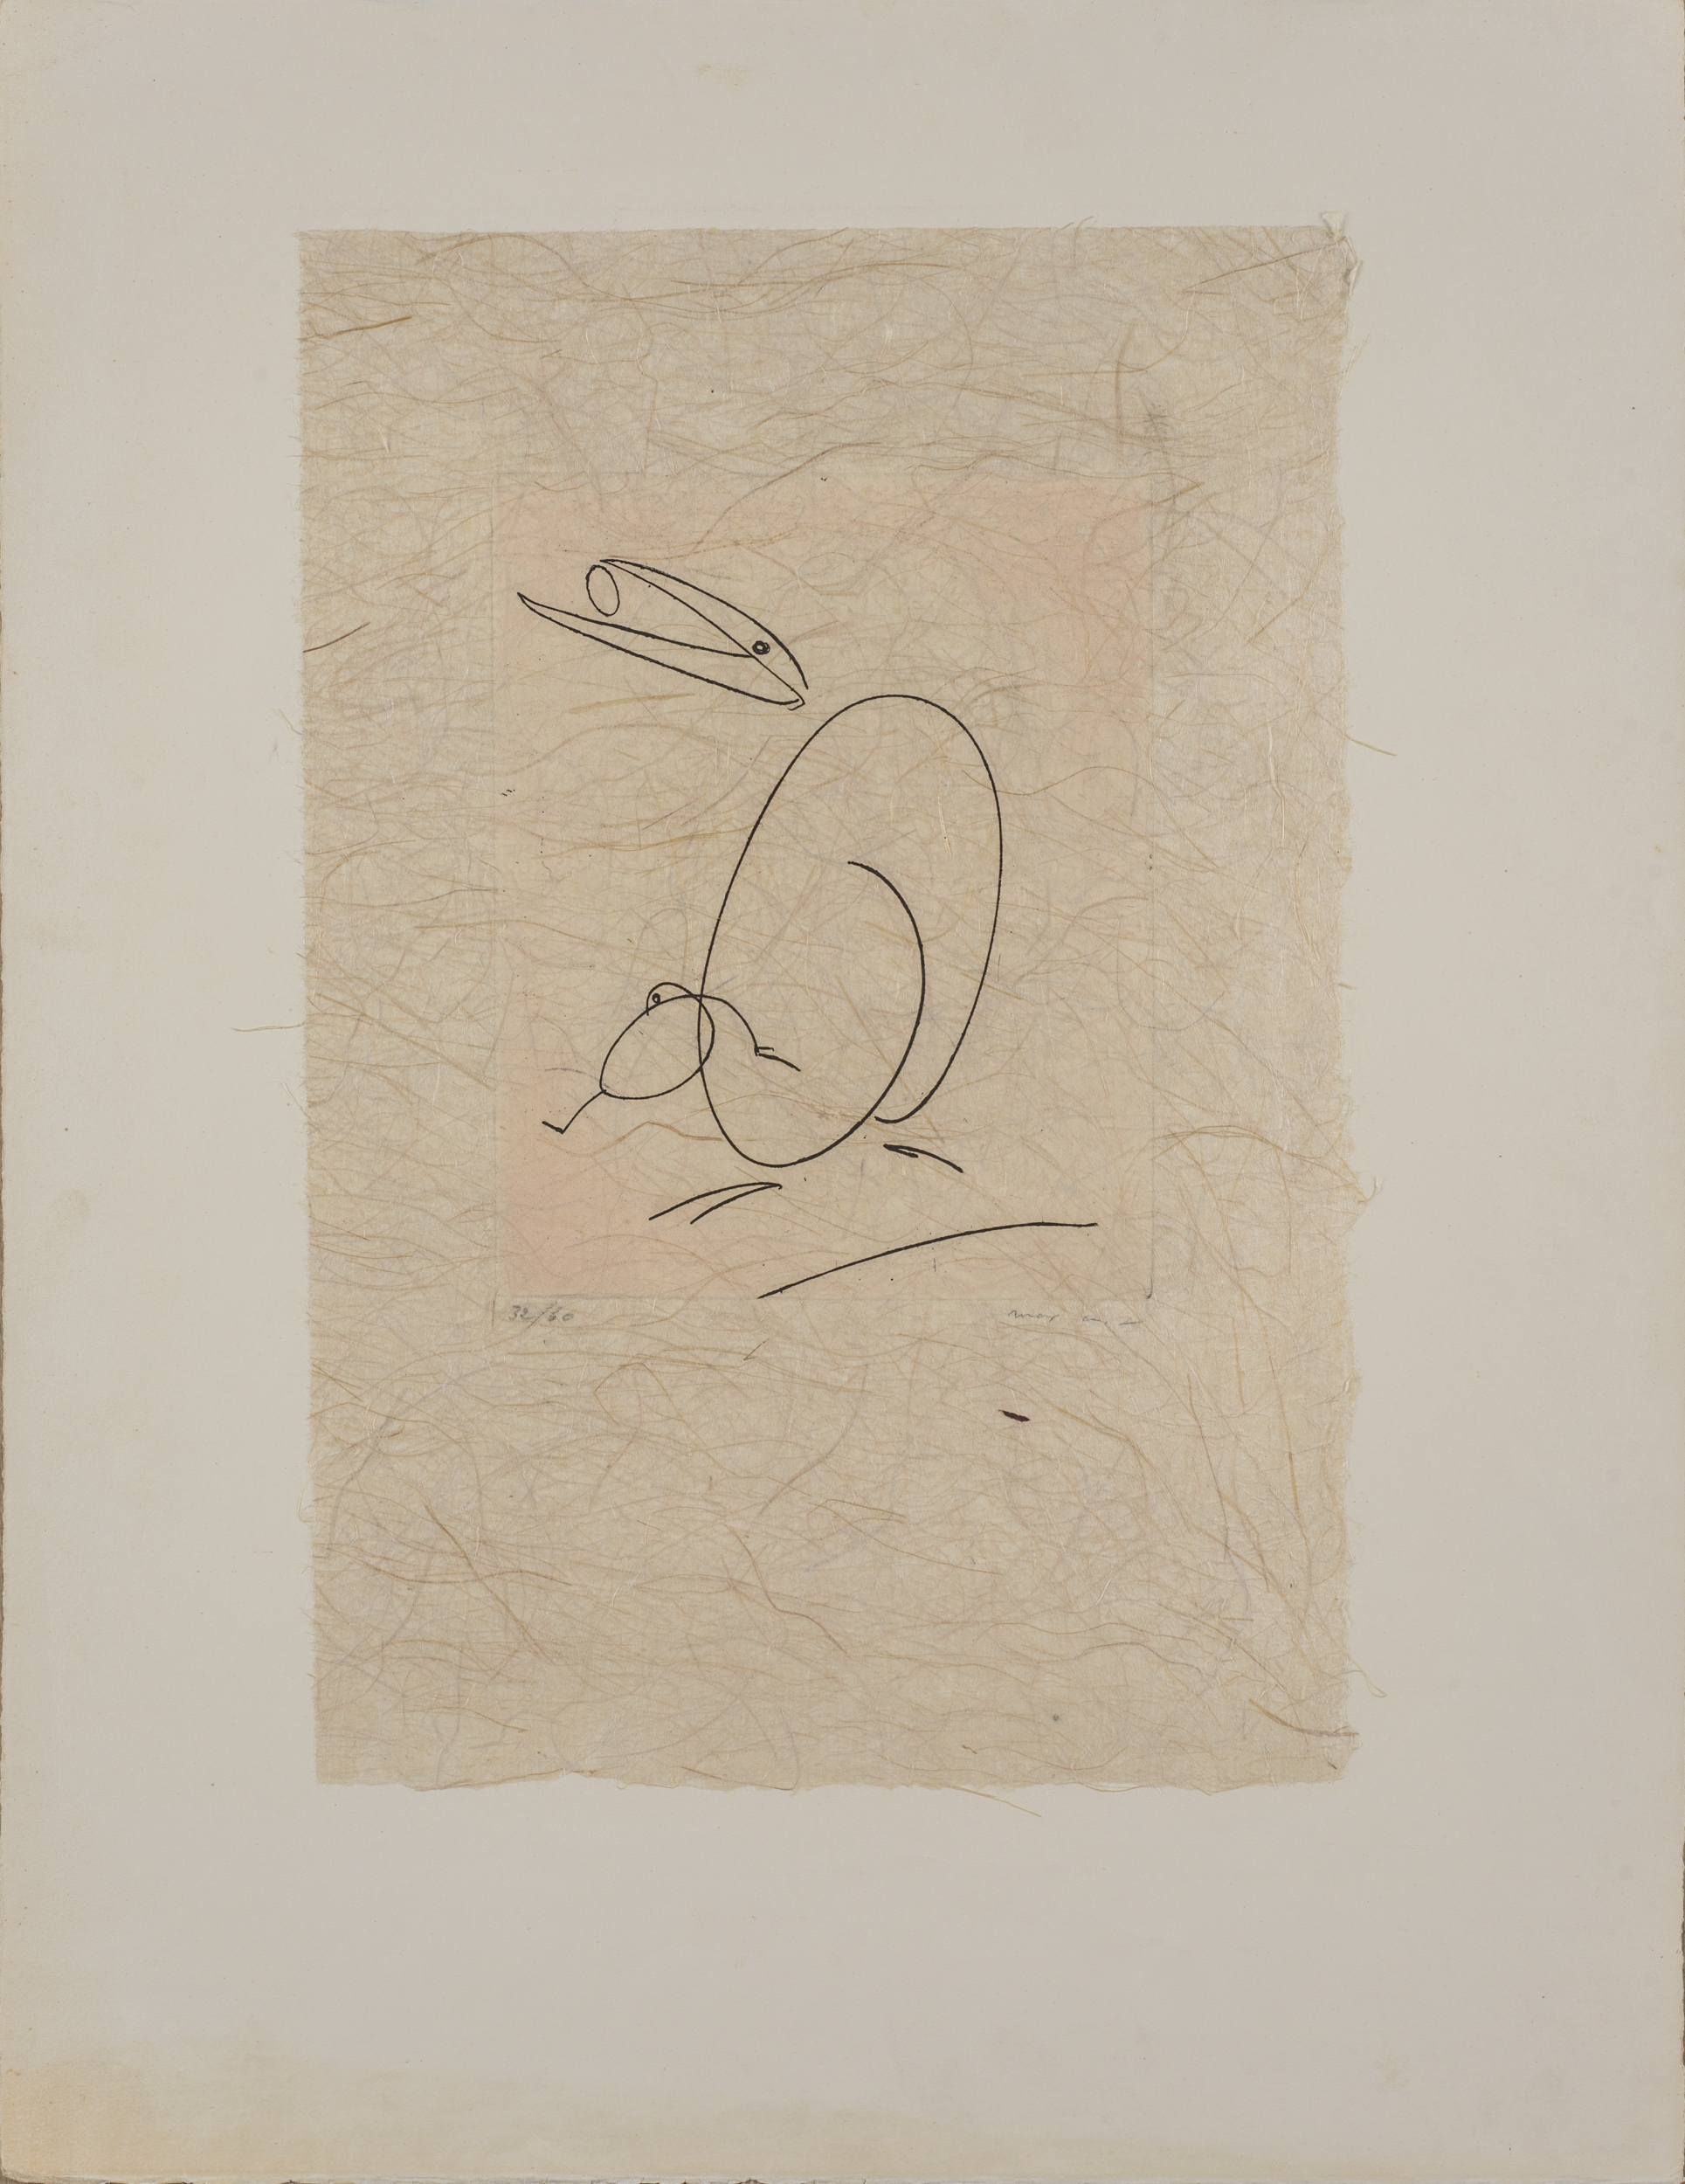 L'oiseau mere, 1972 by Max Ernst, 1972